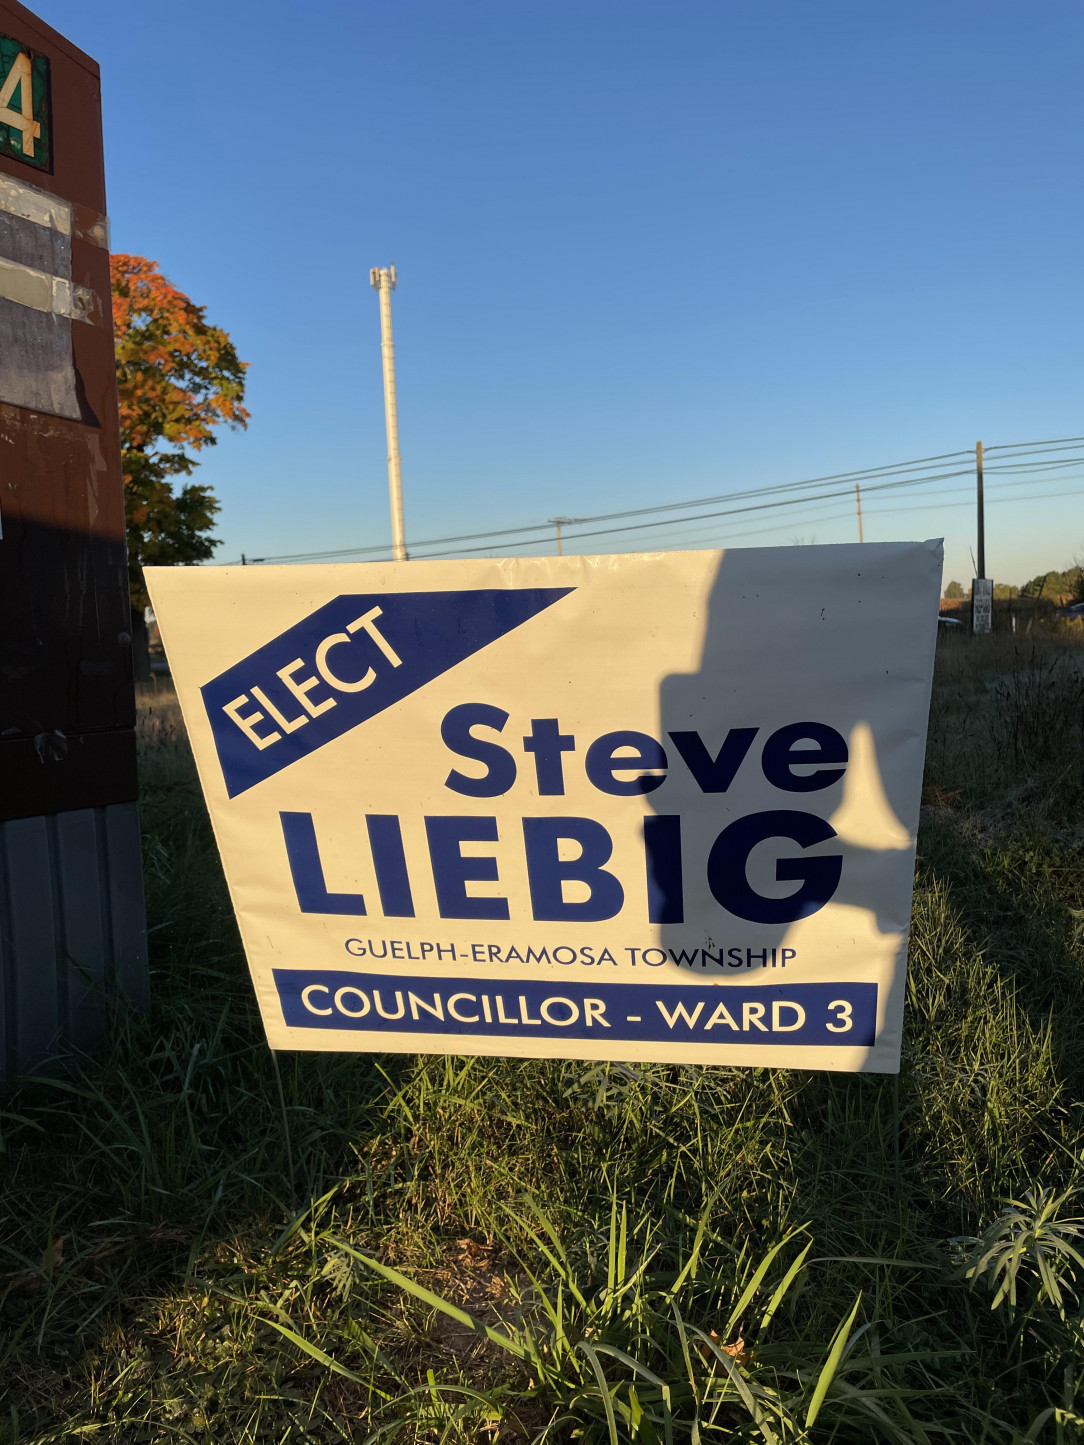 Steve, unfortunate last name for a politician